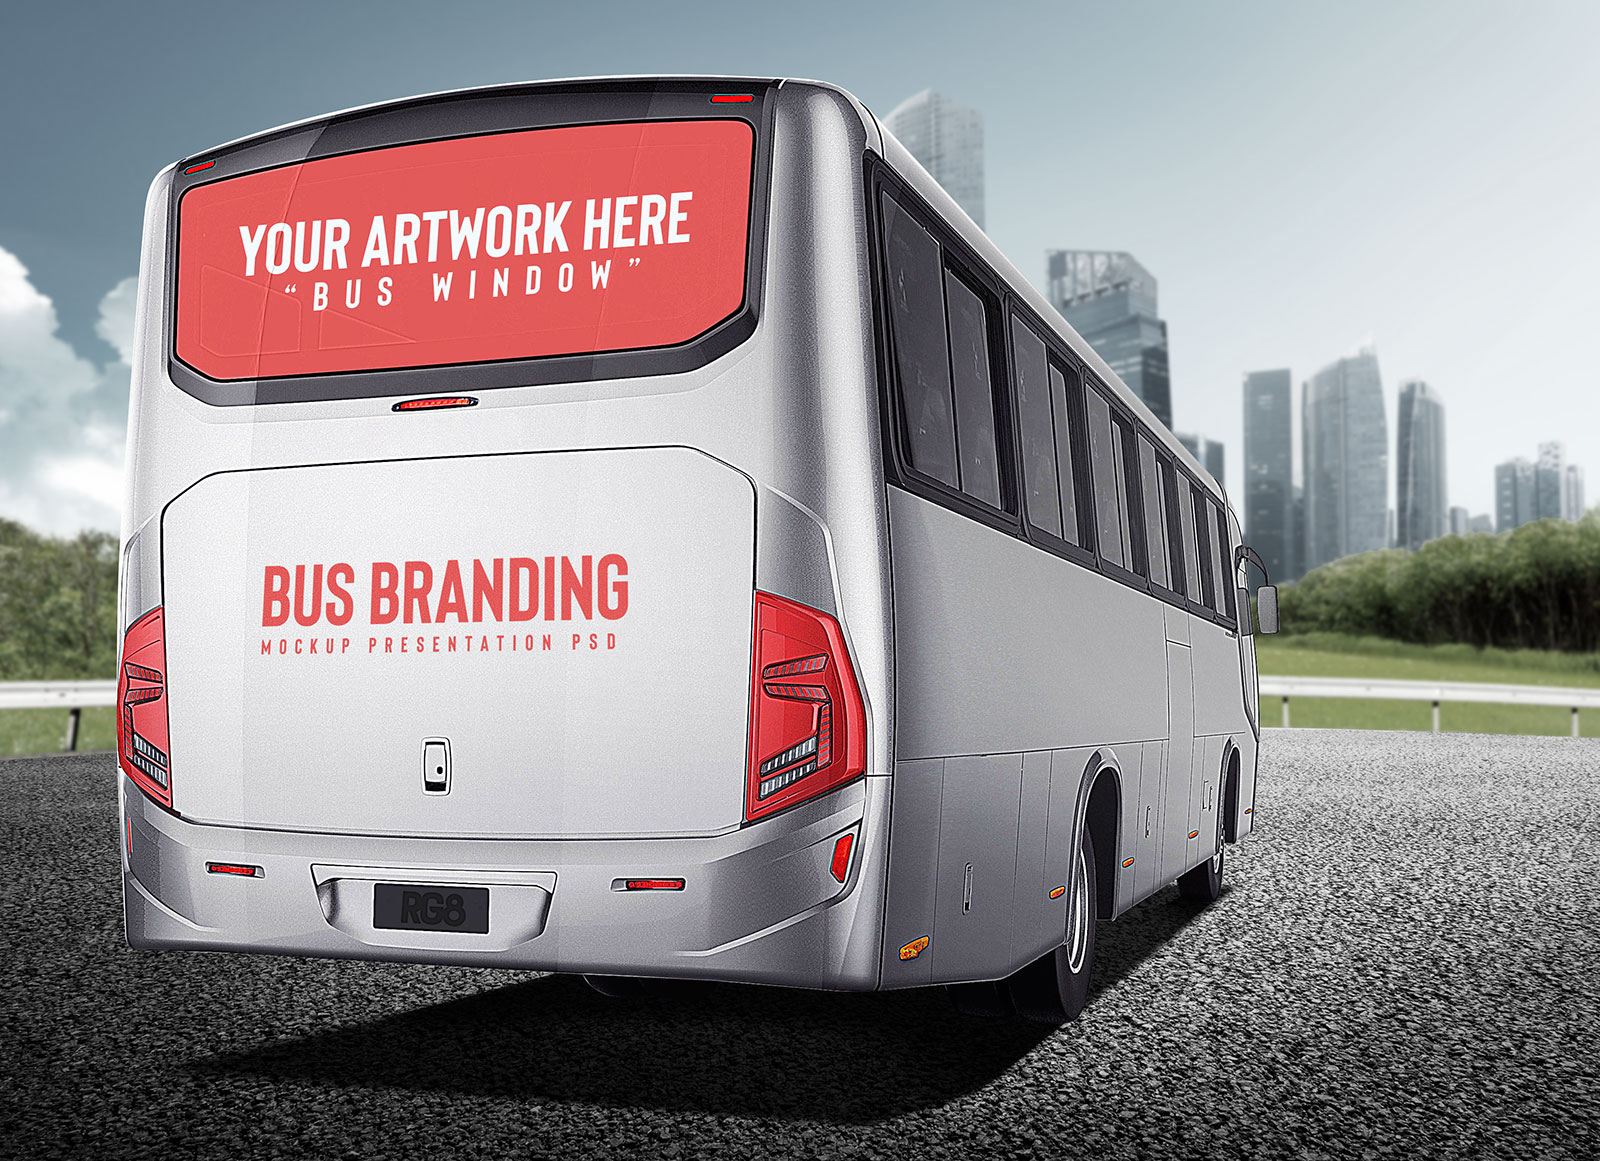 Задняя автобусная реклама макета брендинга